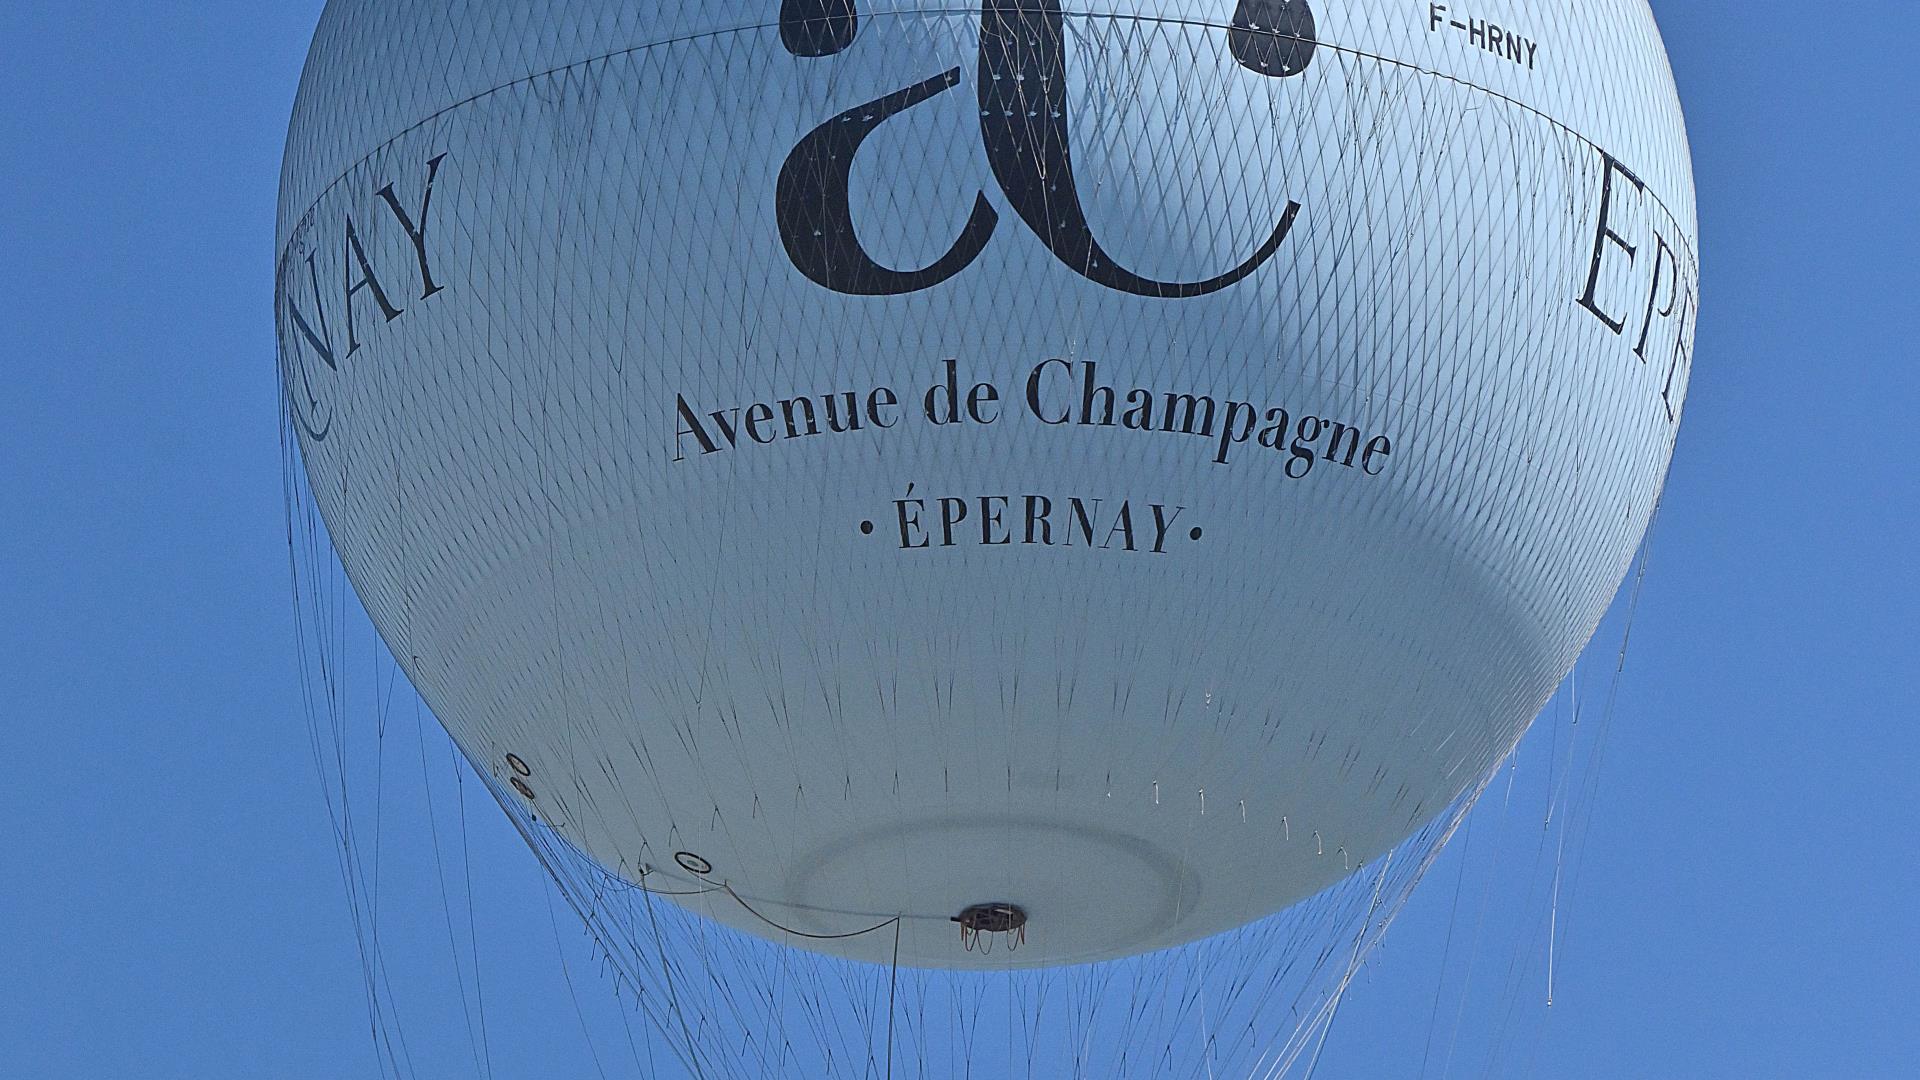 Ballon captif - Epernay - photo Michel Jolyot (49)